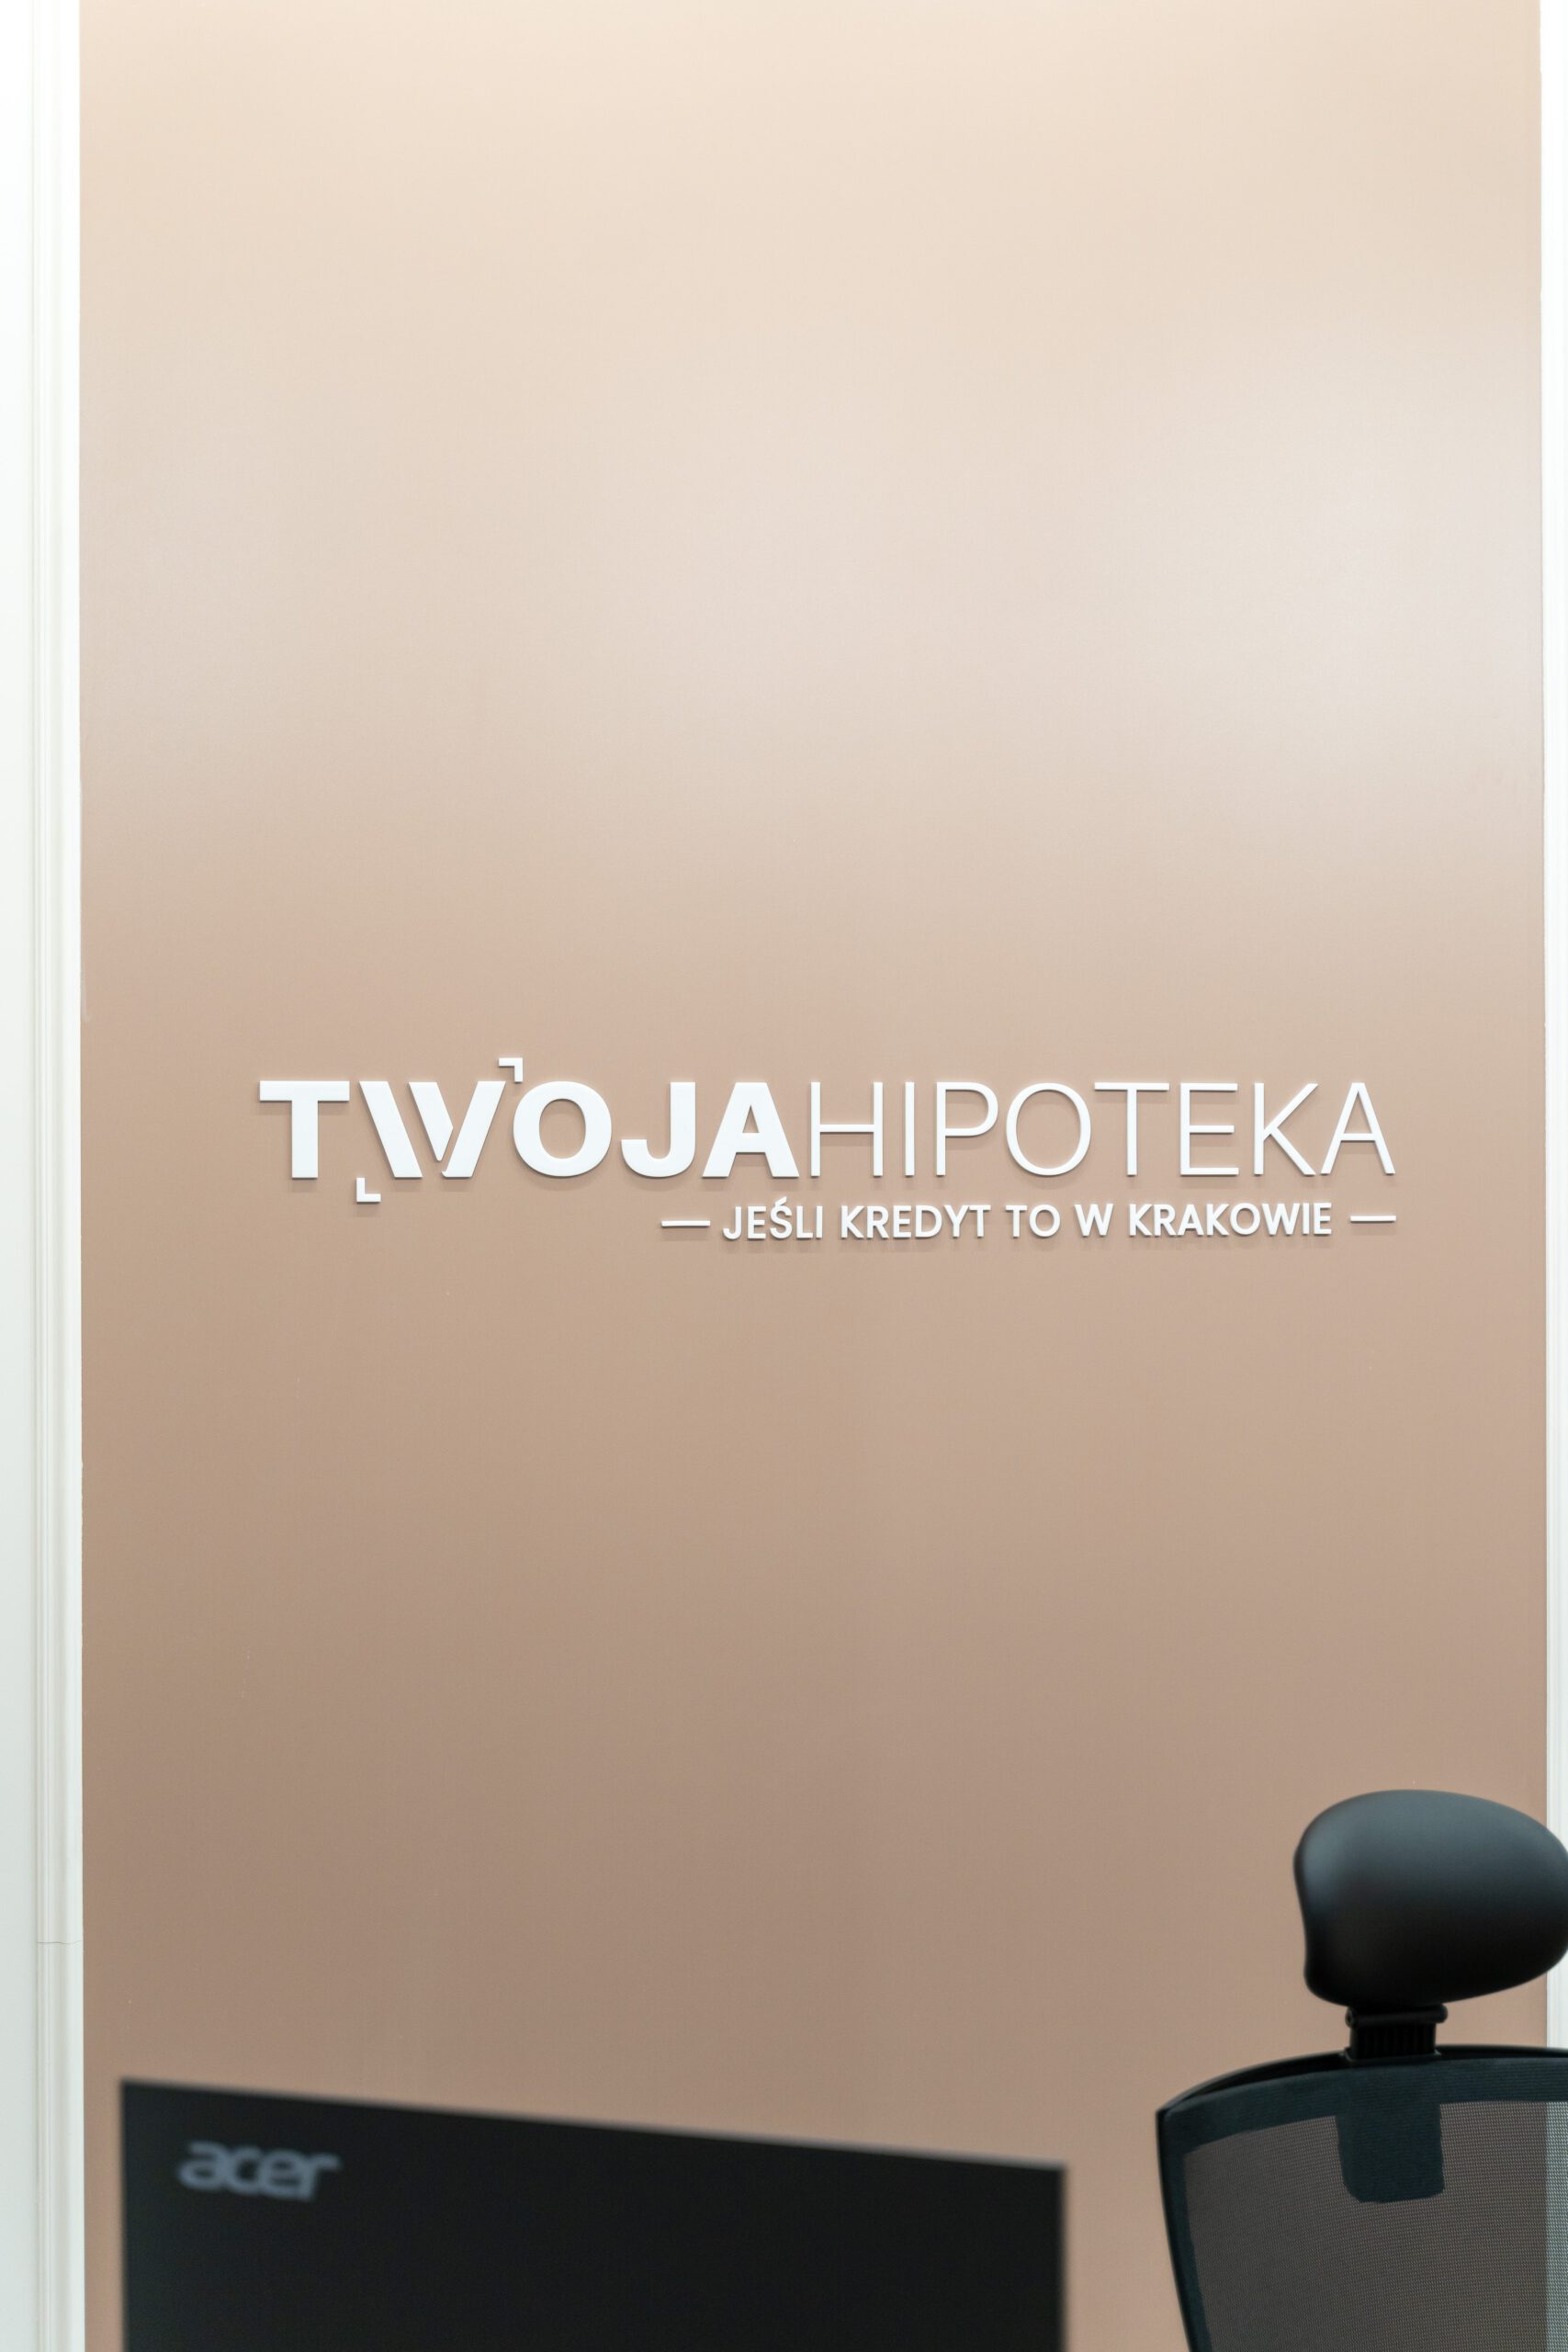 https://twoja-hipoteka.pl/wp-content/uploads/2022/06/Foto_020-min-scaled.jpg 